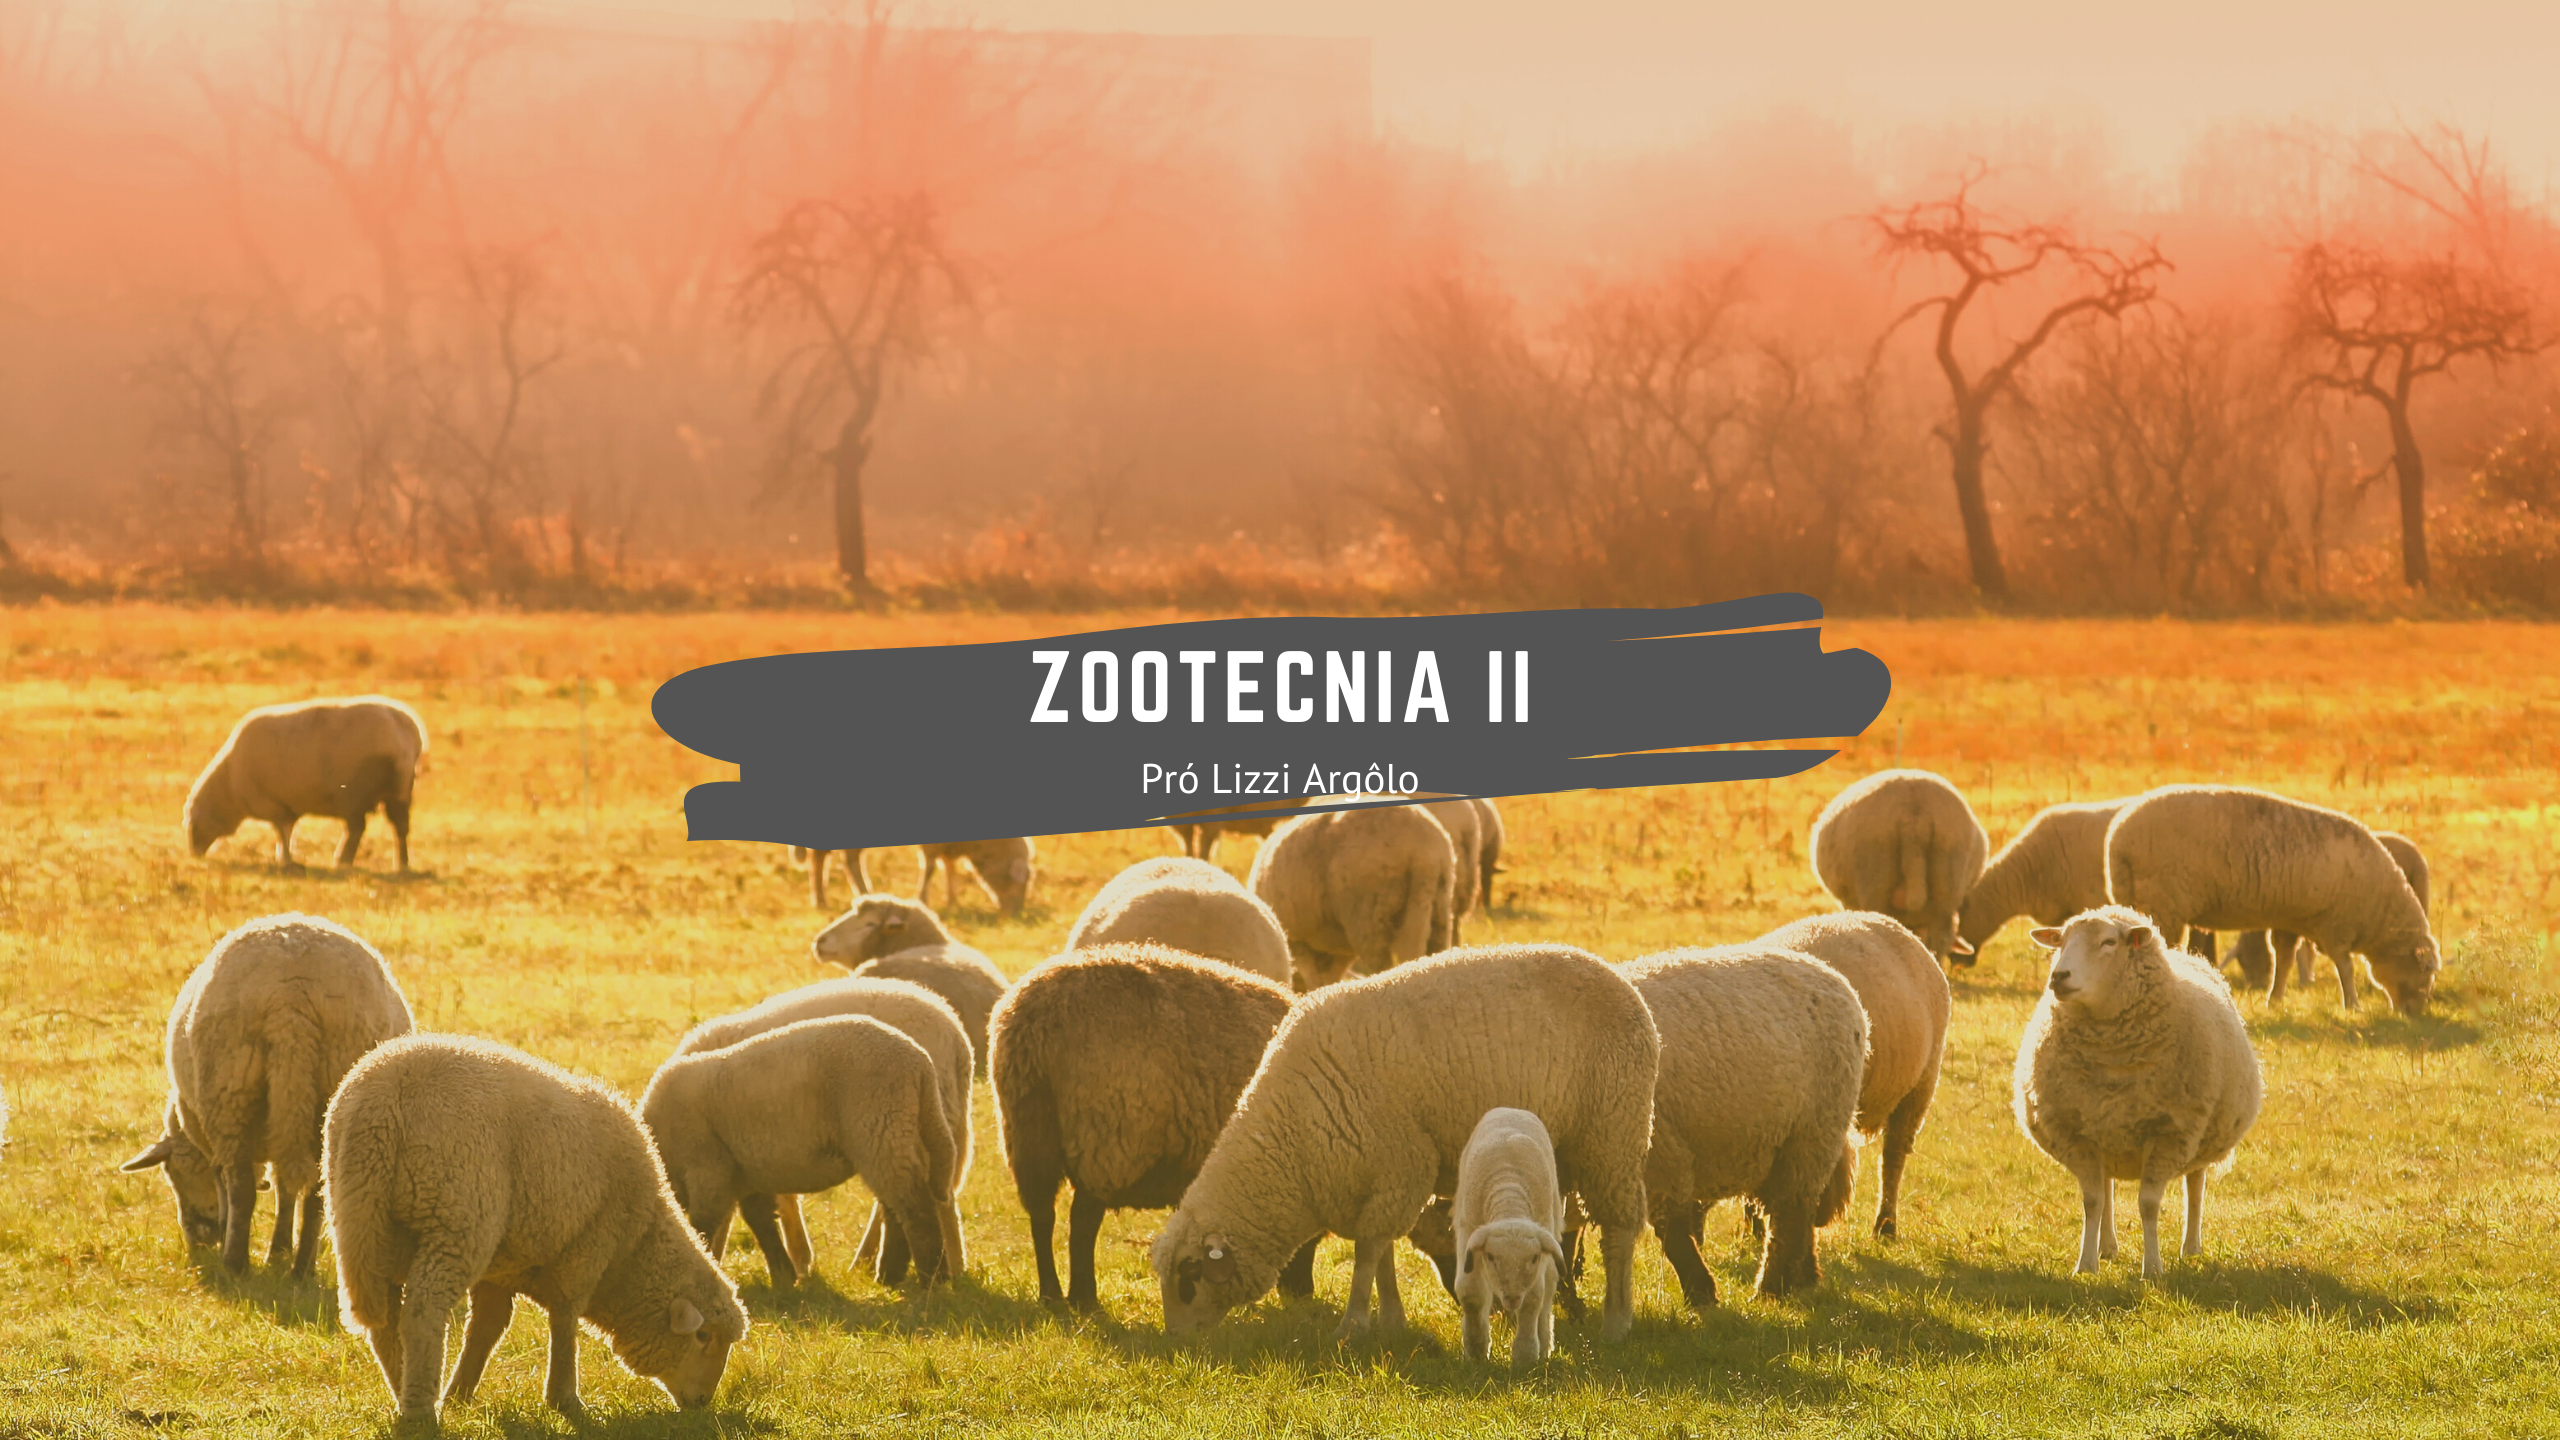 Zootecnia II